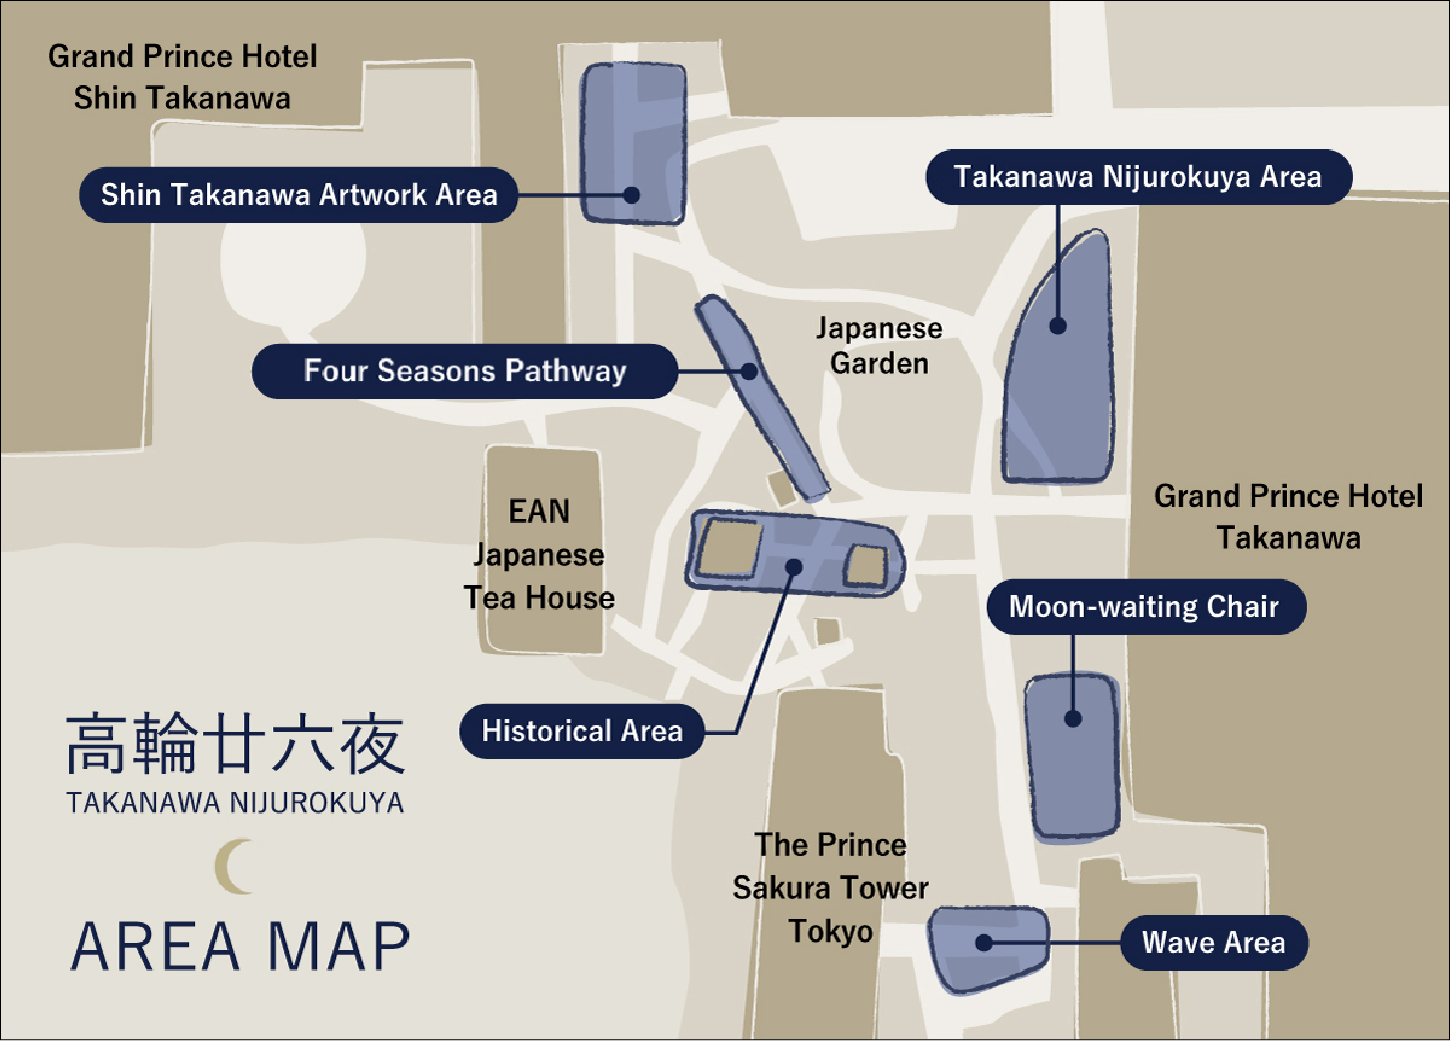 TAKANAWA NIJUROKUYA AREA MAP